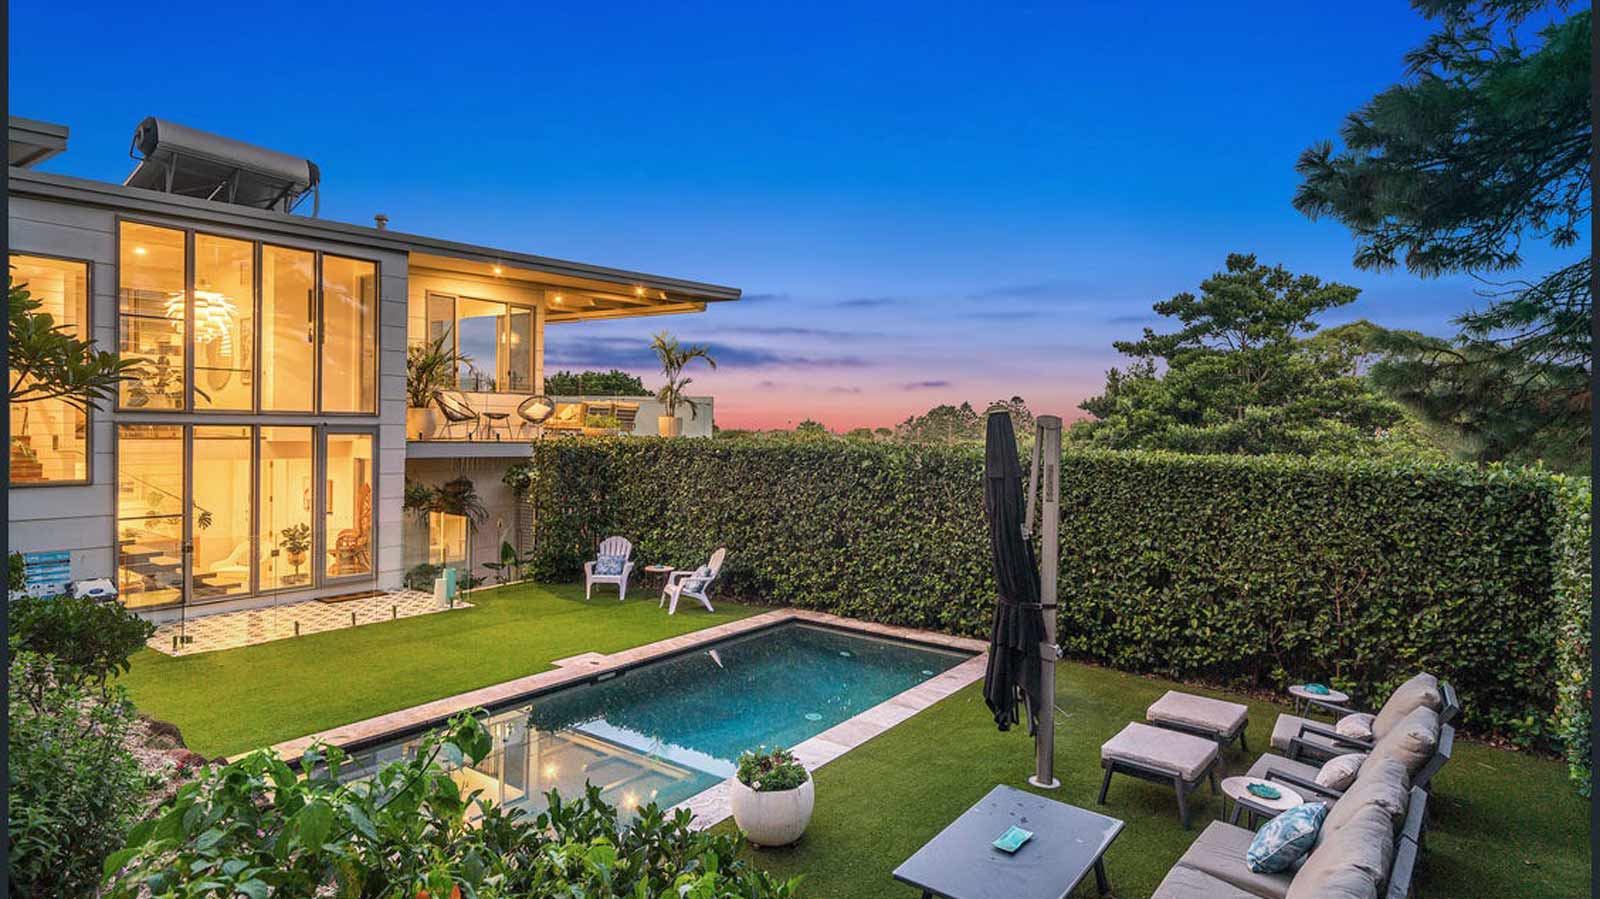 Legendary Surfboard Shaper Bob McTavish Is Selling His Beautiful Byron Bay House